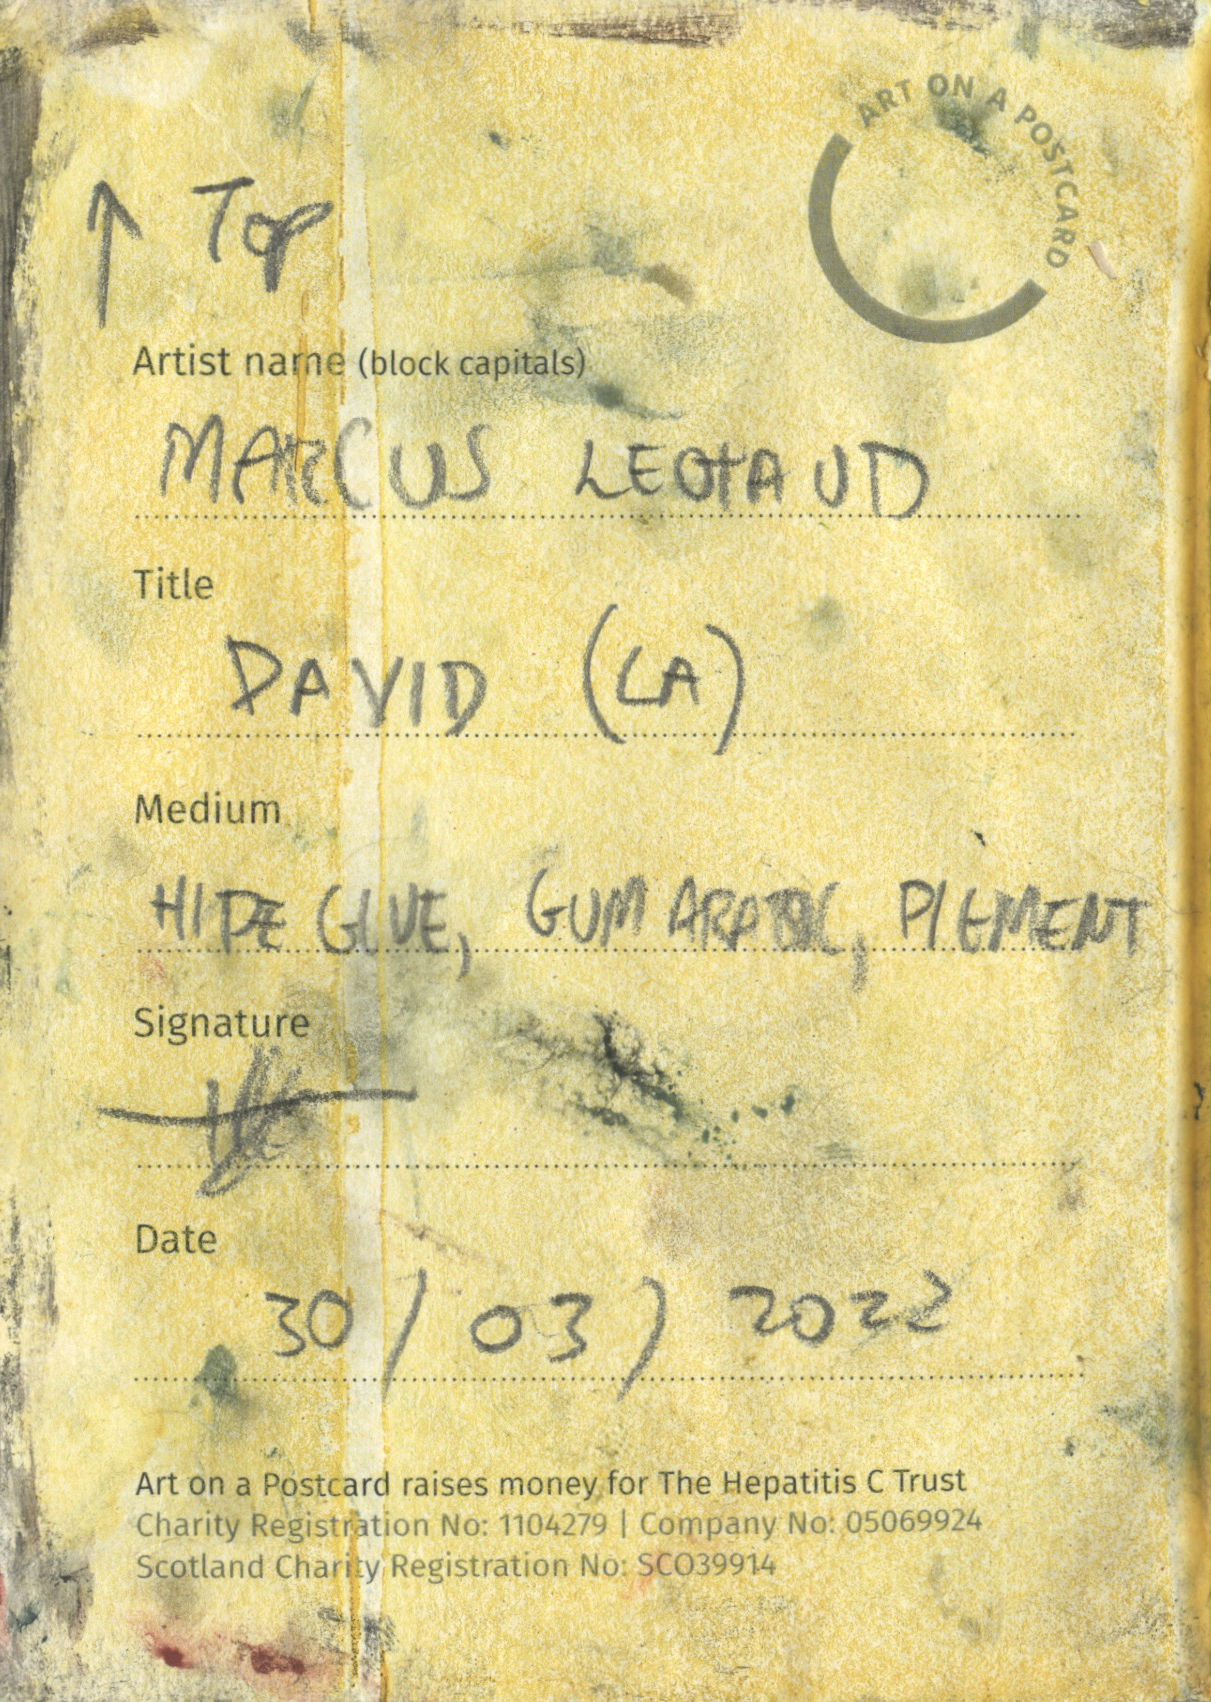 42. Marcus Leotaud - David (LA) - BACK